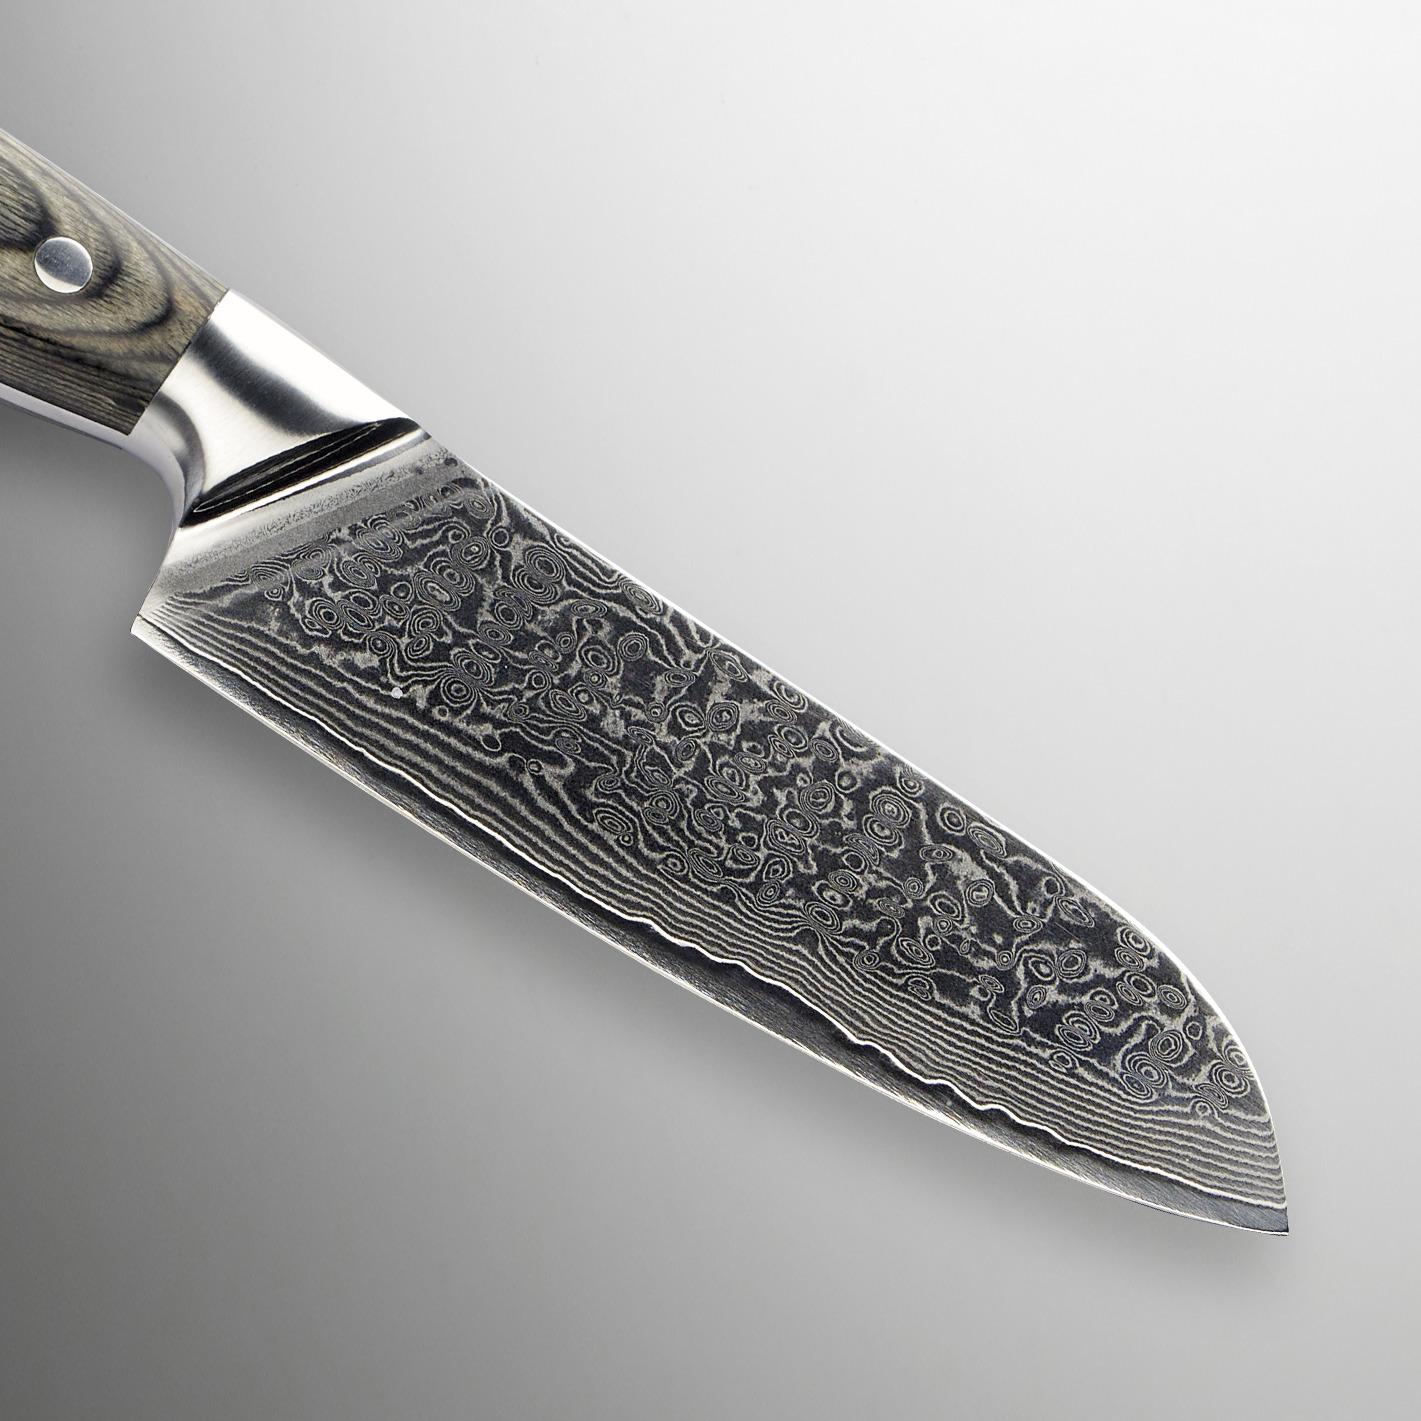 Sada Nožů Damast, 3dílná - barvy stříbra, kov (36,2/3,2/17,4cm) - Premium Living